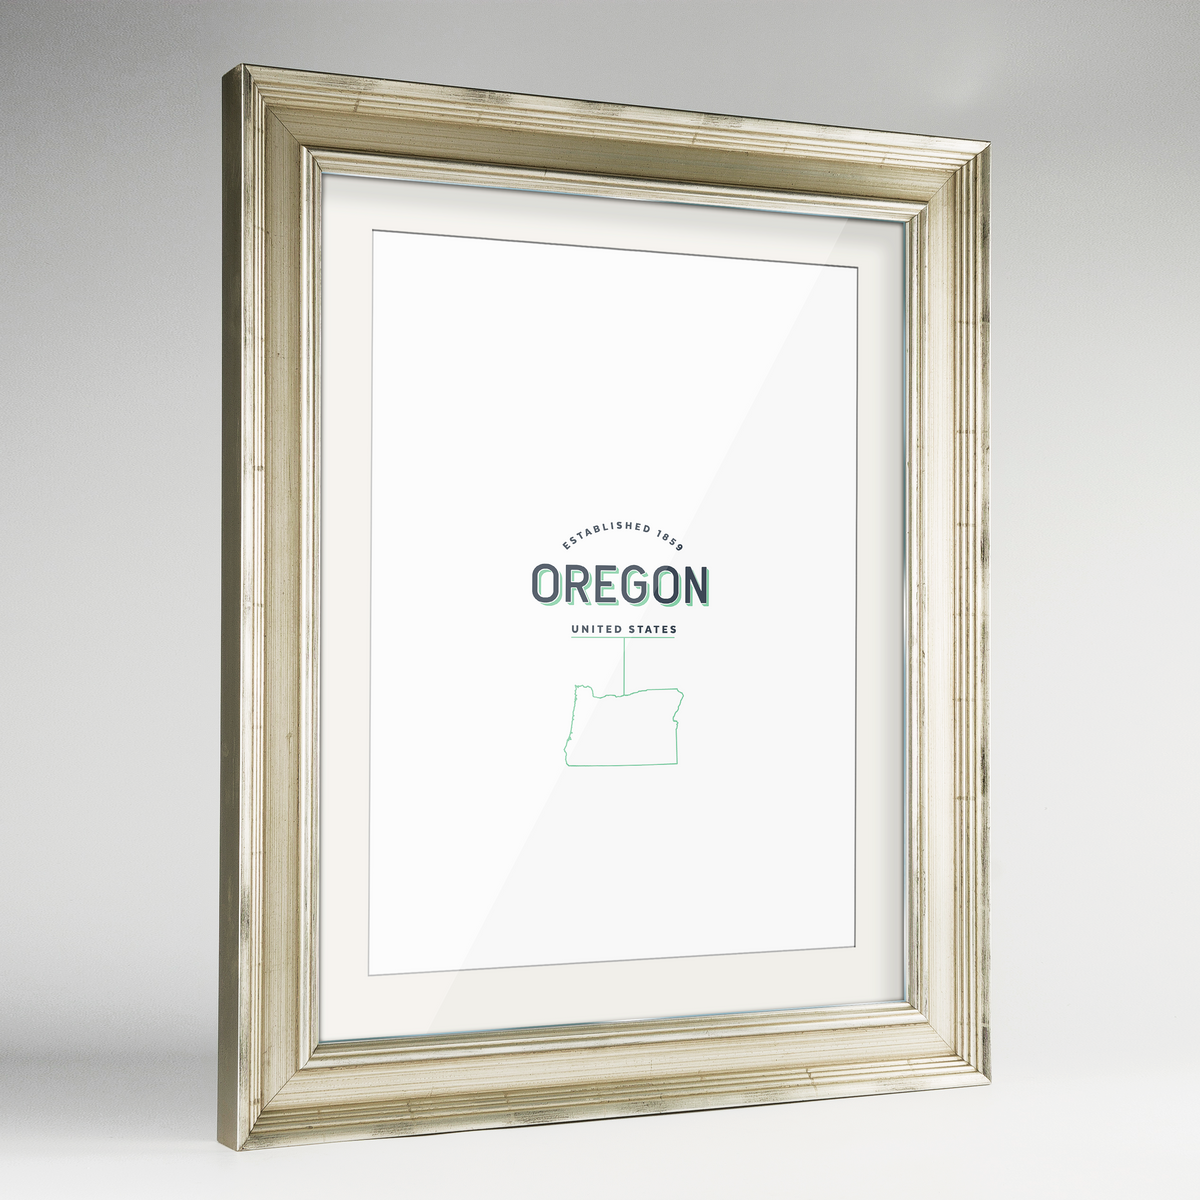 Oregon Word Art Frame Print - State Line